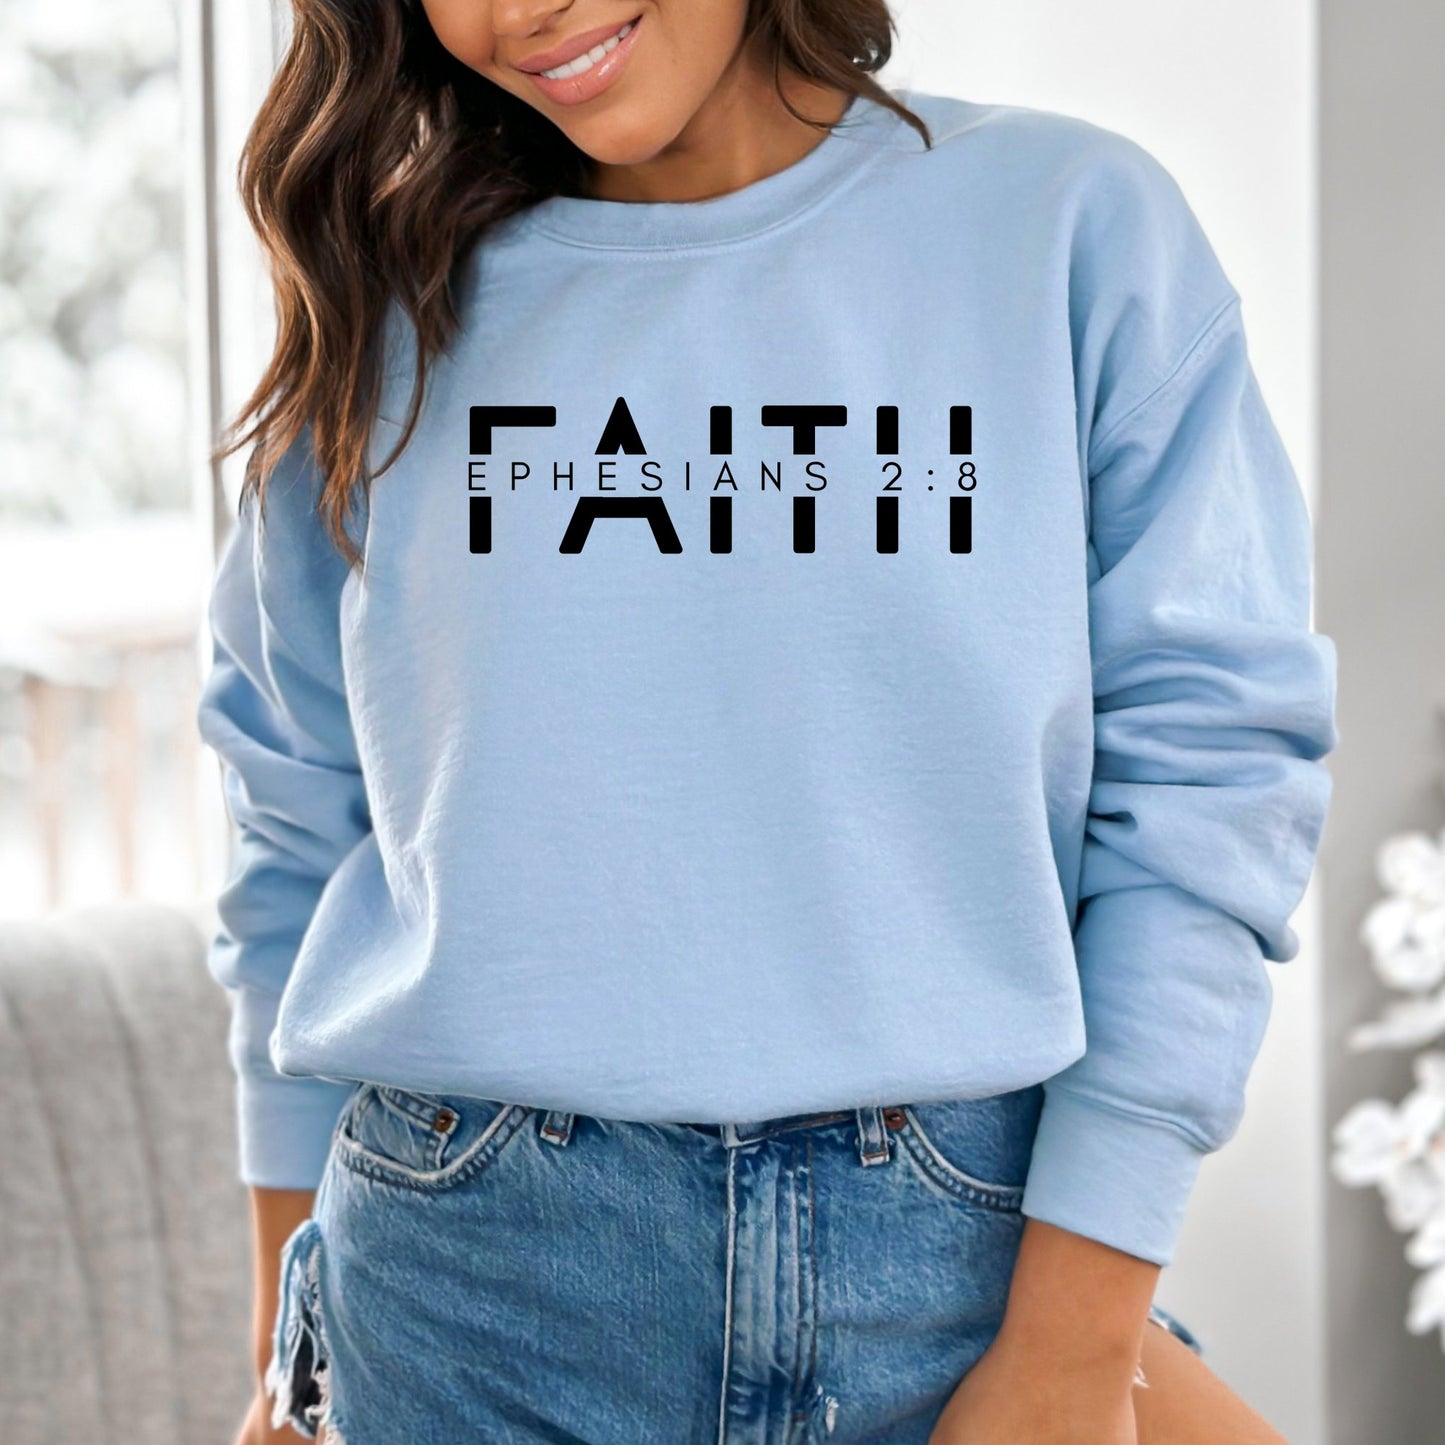 Unisex Faith Ephesians 2:8 Sweatshirt, Bible Verse Christian Pullover, Religious Scripture Soft Cotton Sweater, Casual Wear - Mardonyx Sweatshirt